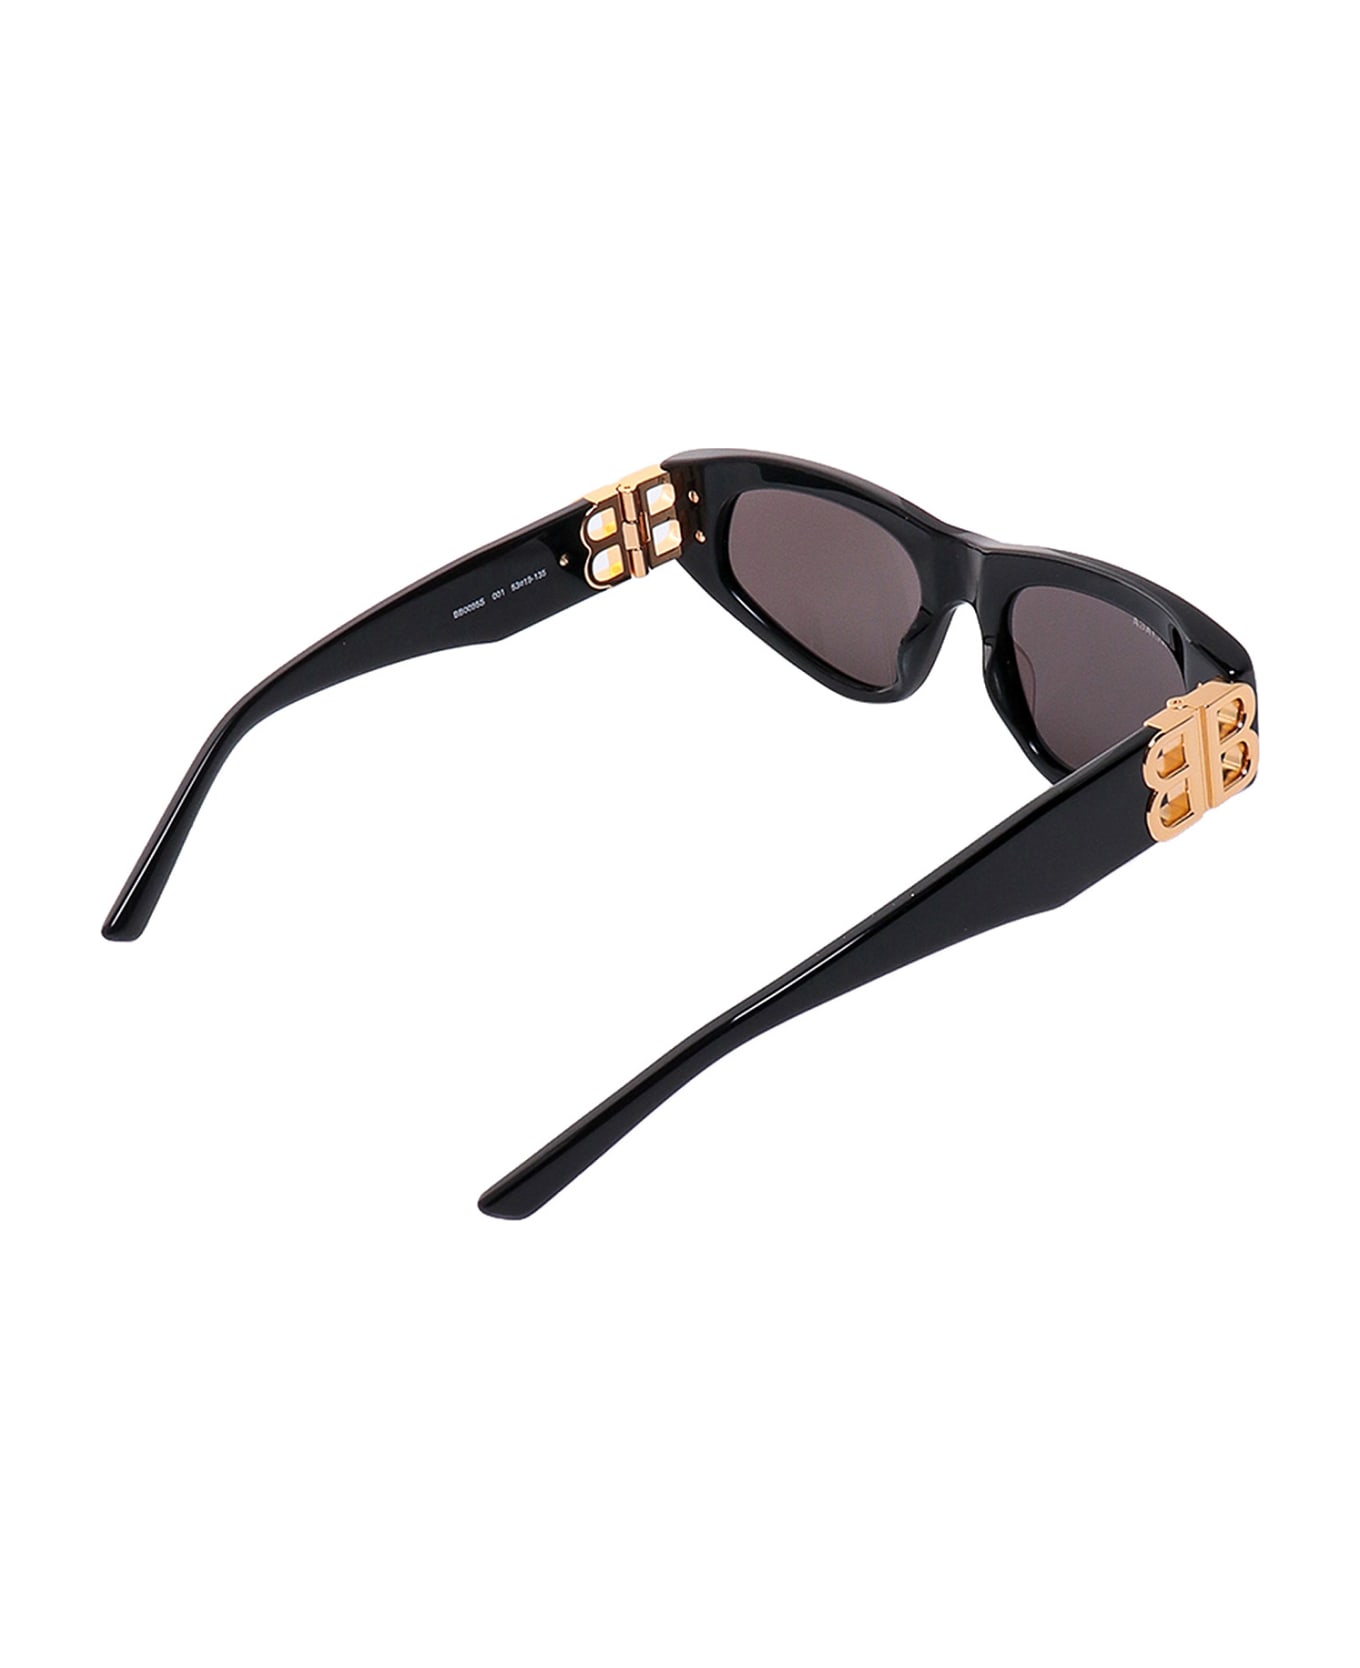 Balenciaga Eyewear Dinasty D-frame Sunglasses - Black